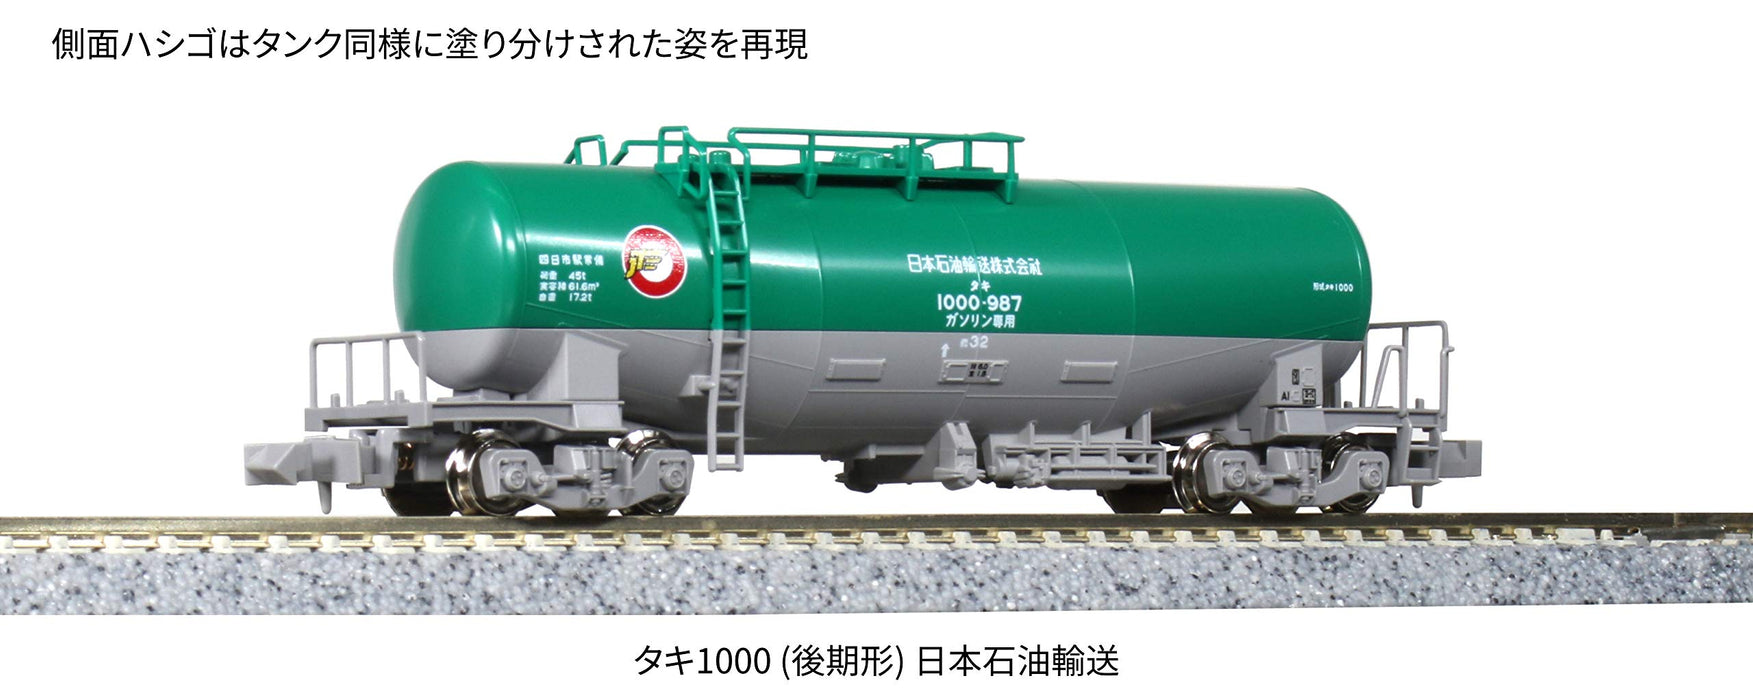 Kato N Gauge Taki 1000 Late 8081 Nippon Oil Transport Railway Freight Car Model